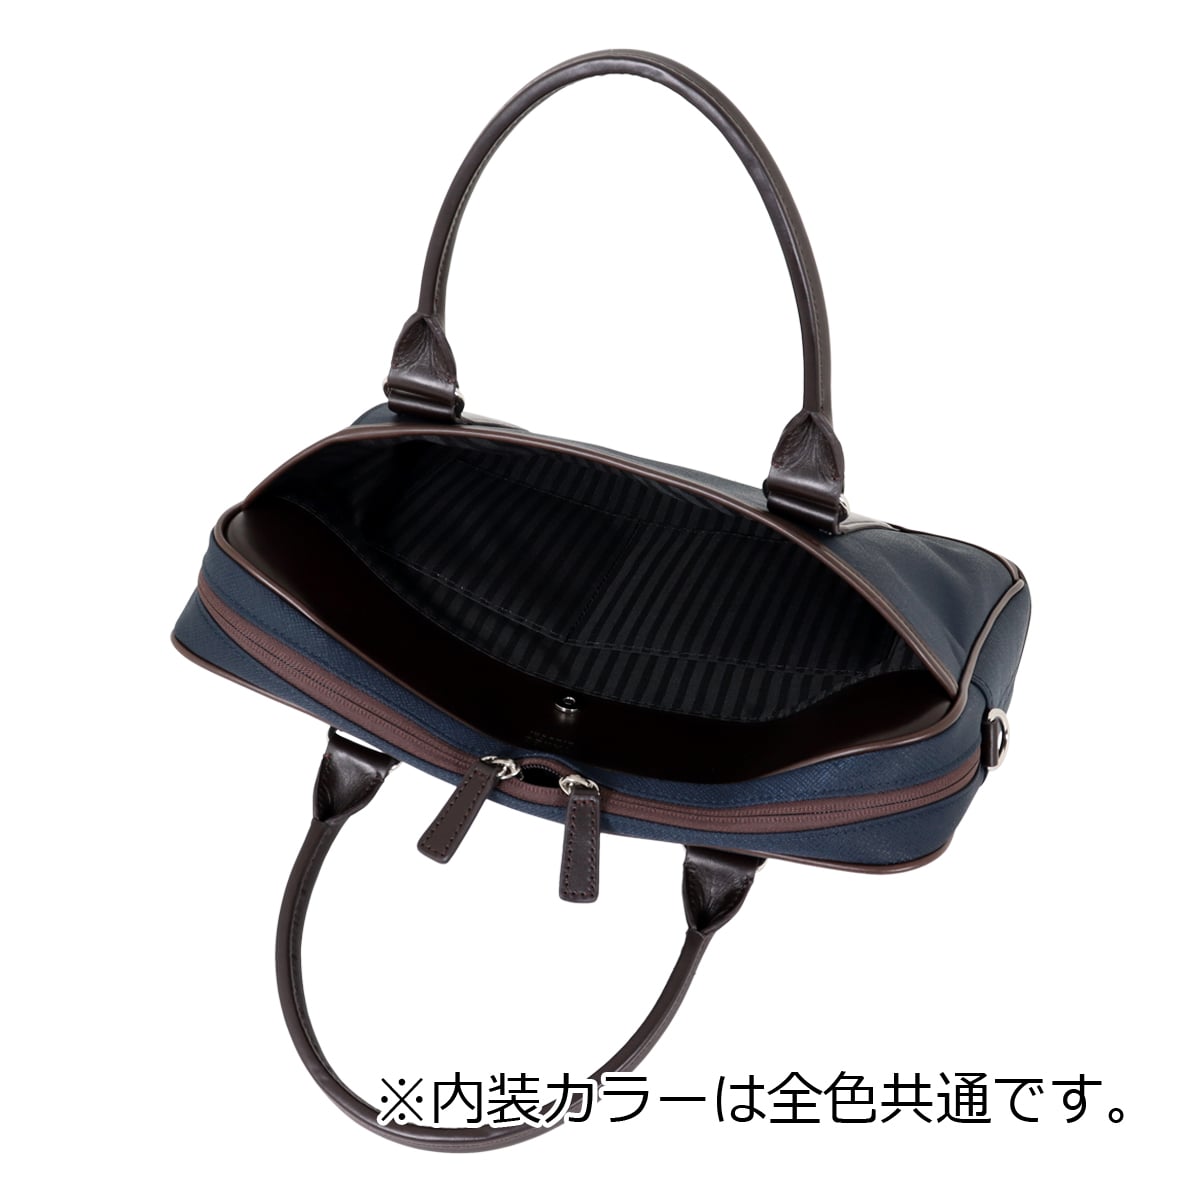 is/it 33000円ビジネスバッグ と タケオキクチの紺色ビジネスバッグ